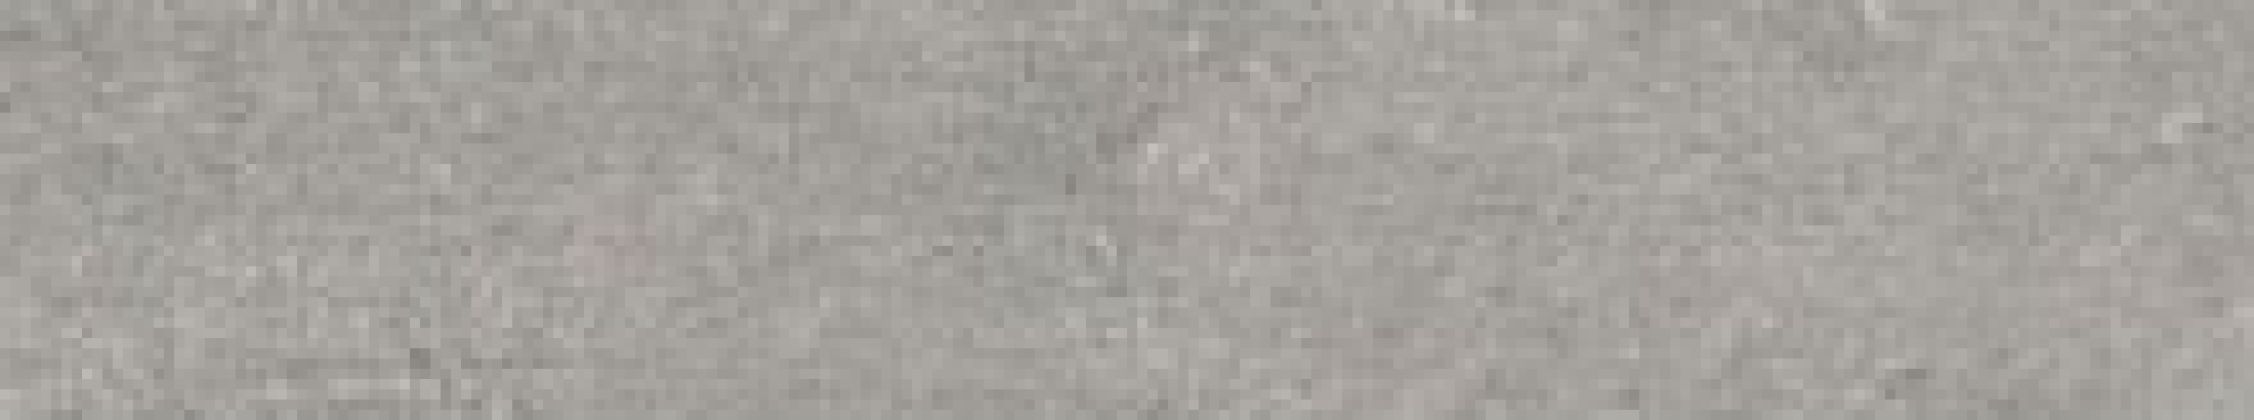 Плинтус Newcon серебристо-серый R10A 7РЕК 7,5x60 K948251R0001VTE0